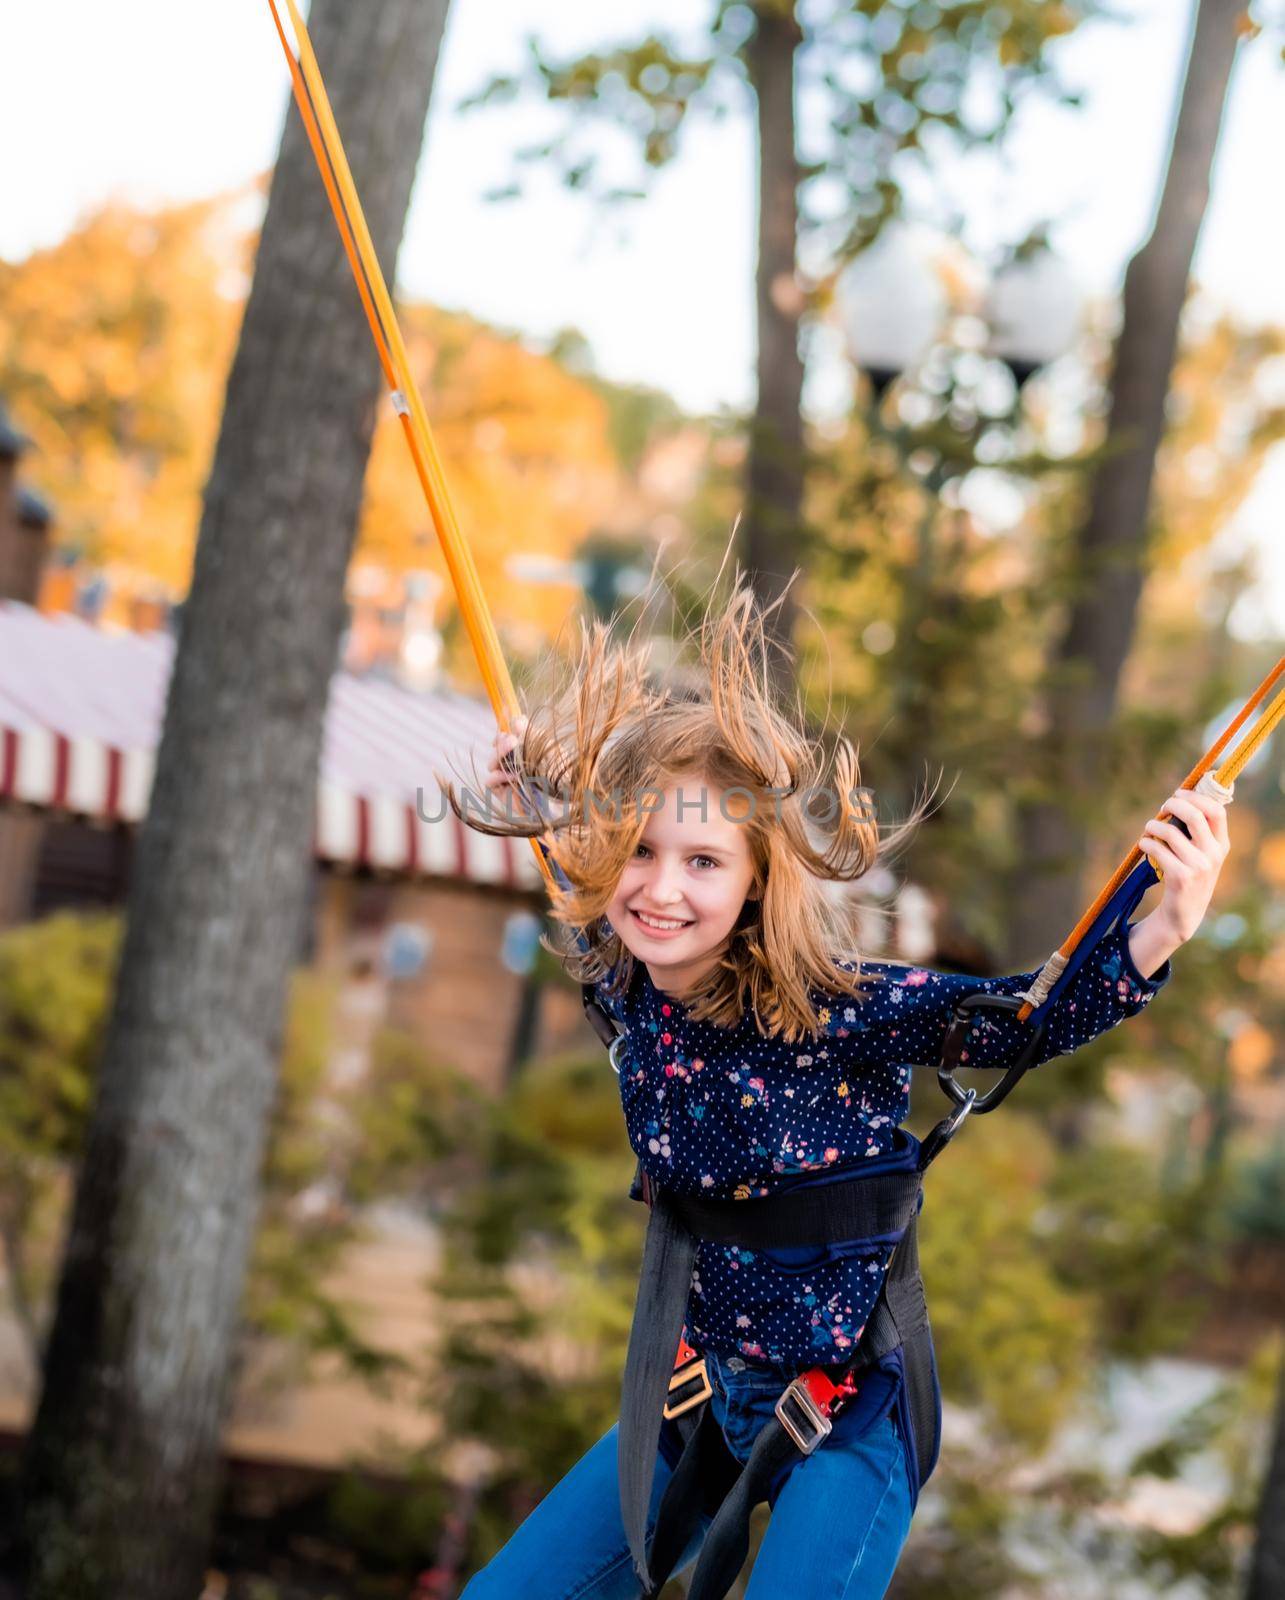 Smiling little girl jumping on trampoline rope by GekaSkr